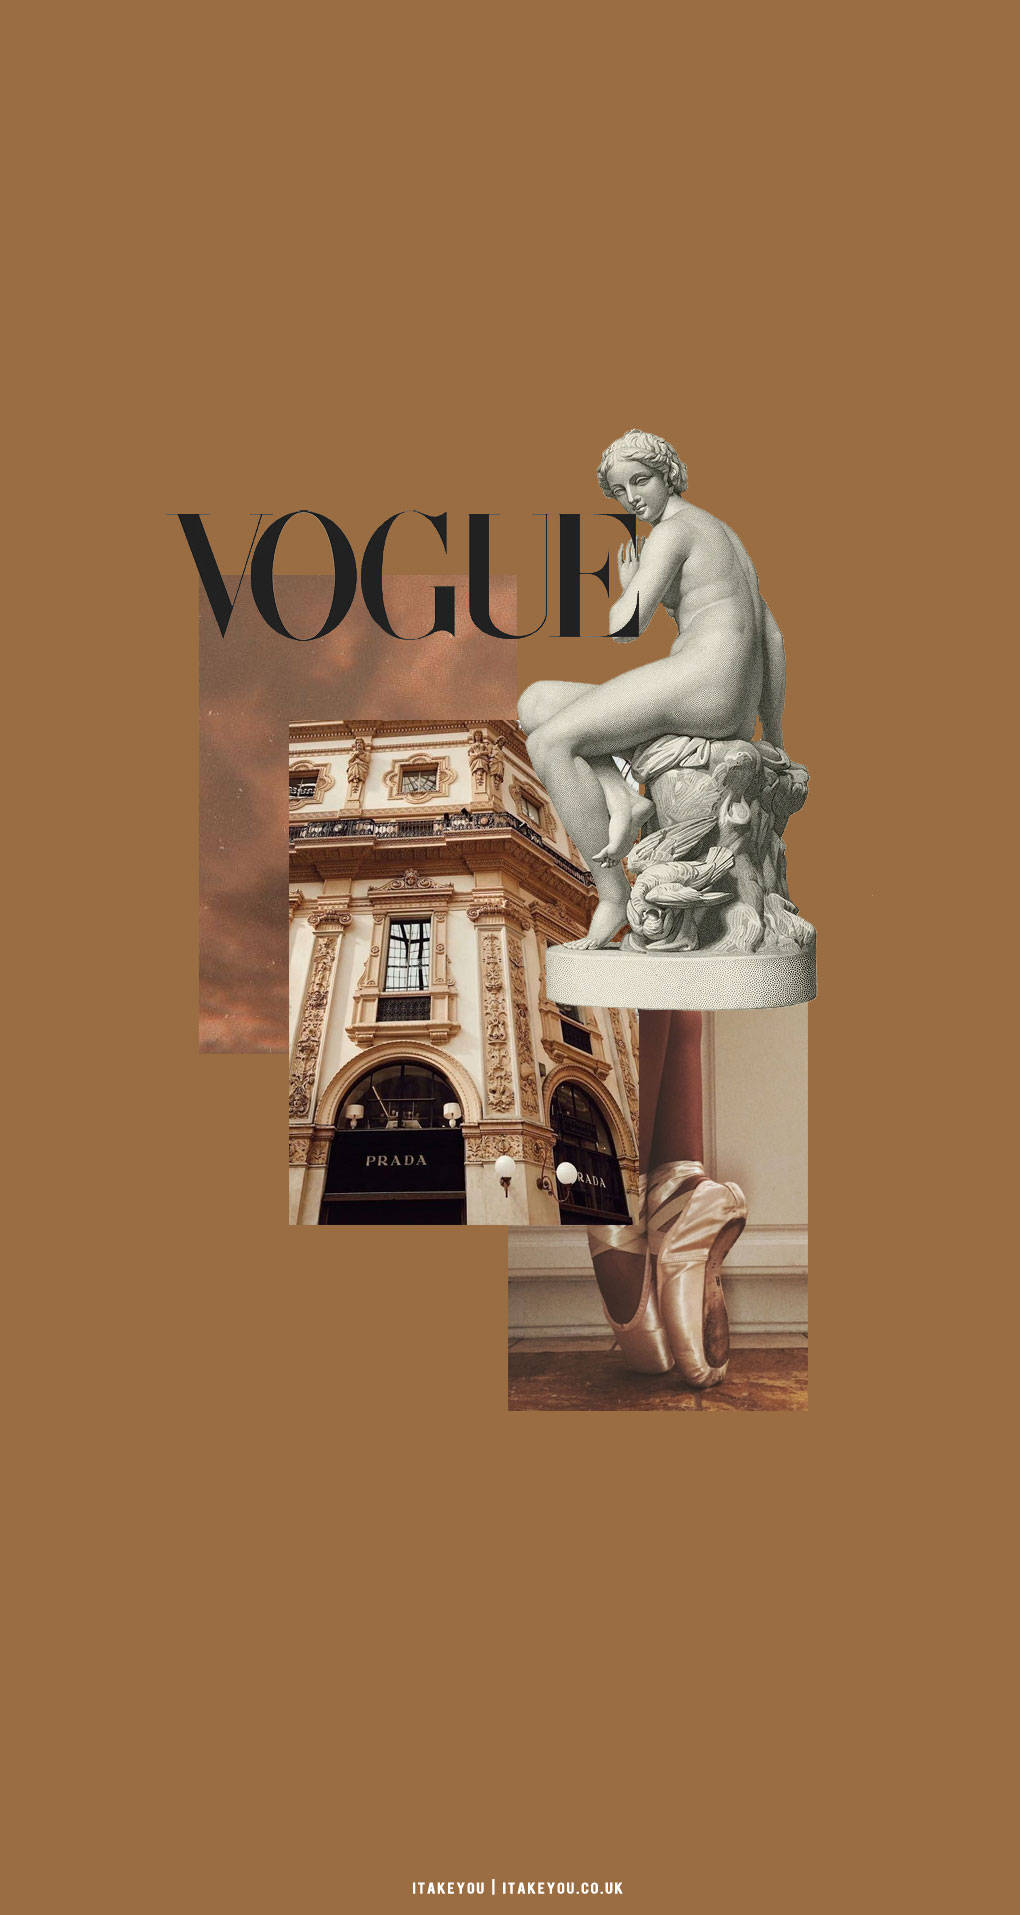 Vogue Magazine Beige Brown Aesthetic Wallpaper